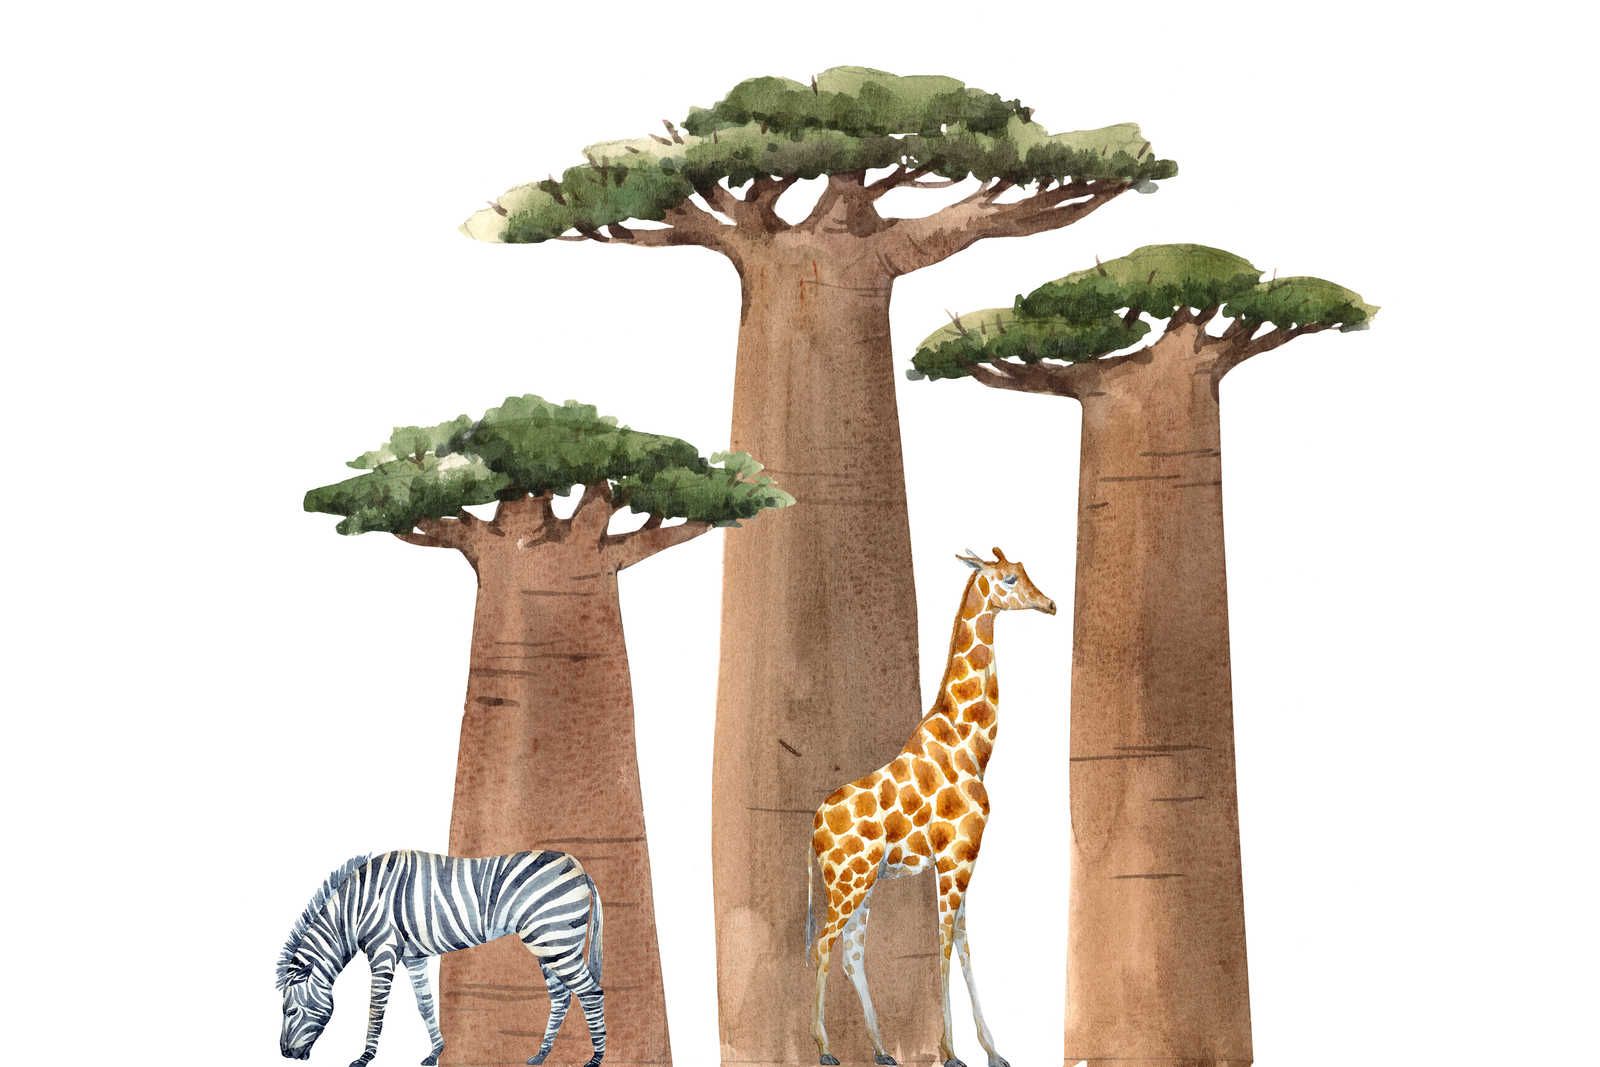             Canvas Savannah with Giraffe and Zebra - 90 cm x 60 cm
        